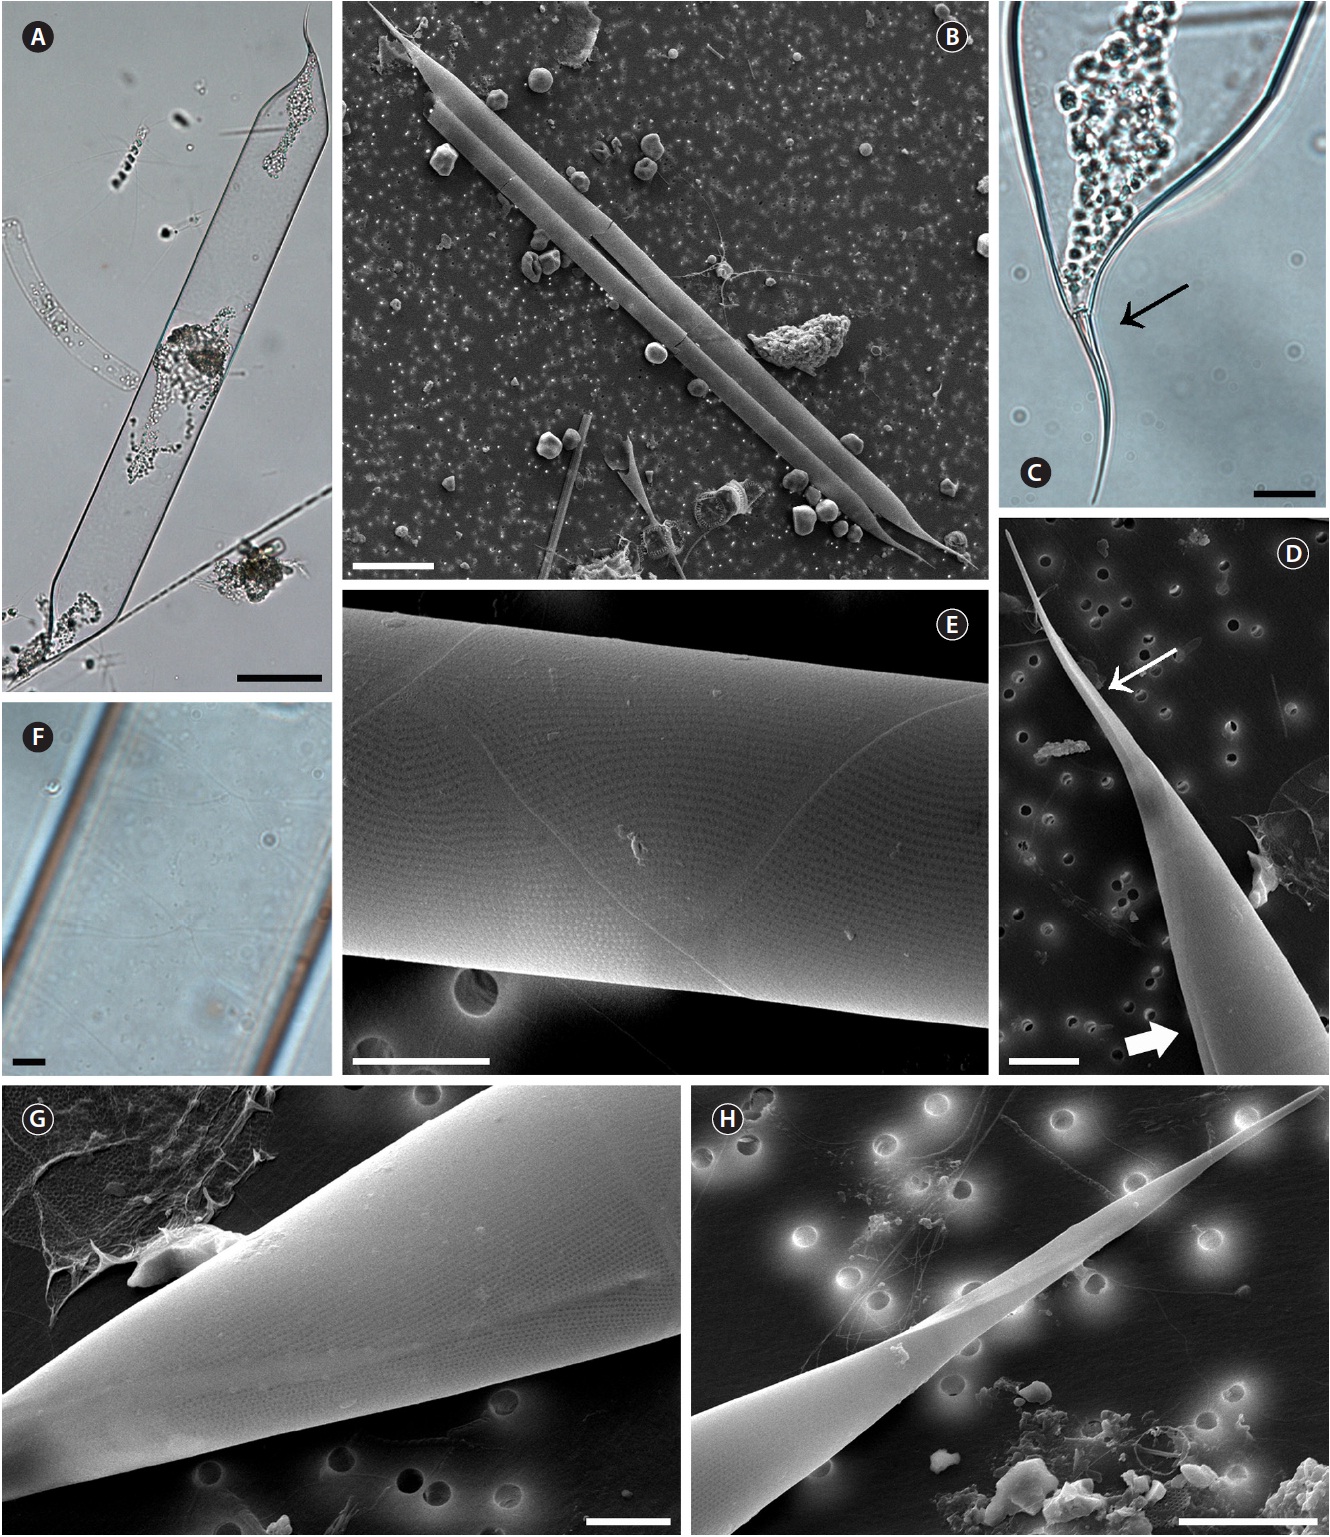 Pseudosolenia calcar-avis. (A) A complete cell light microscopy (LM). (B) Complete cells, scanning electron microcopy (SEM). (C) Apical part of valve, internal structure of external process (arrow), LM. (D) Apical part of valve, claw or screw shaped external process (arrow), SEM. (E) Details of girdle segments, regularly straight striation, SEM. (F) Girdle segments, LM. (G) Apical part of valve, sigmoid contiguous area, SEM. (H) Screw shaped external process, SEM. Scale bars represent: A & B, 50 μm; C-E & H, 10 μm; F & G, 5 μm.